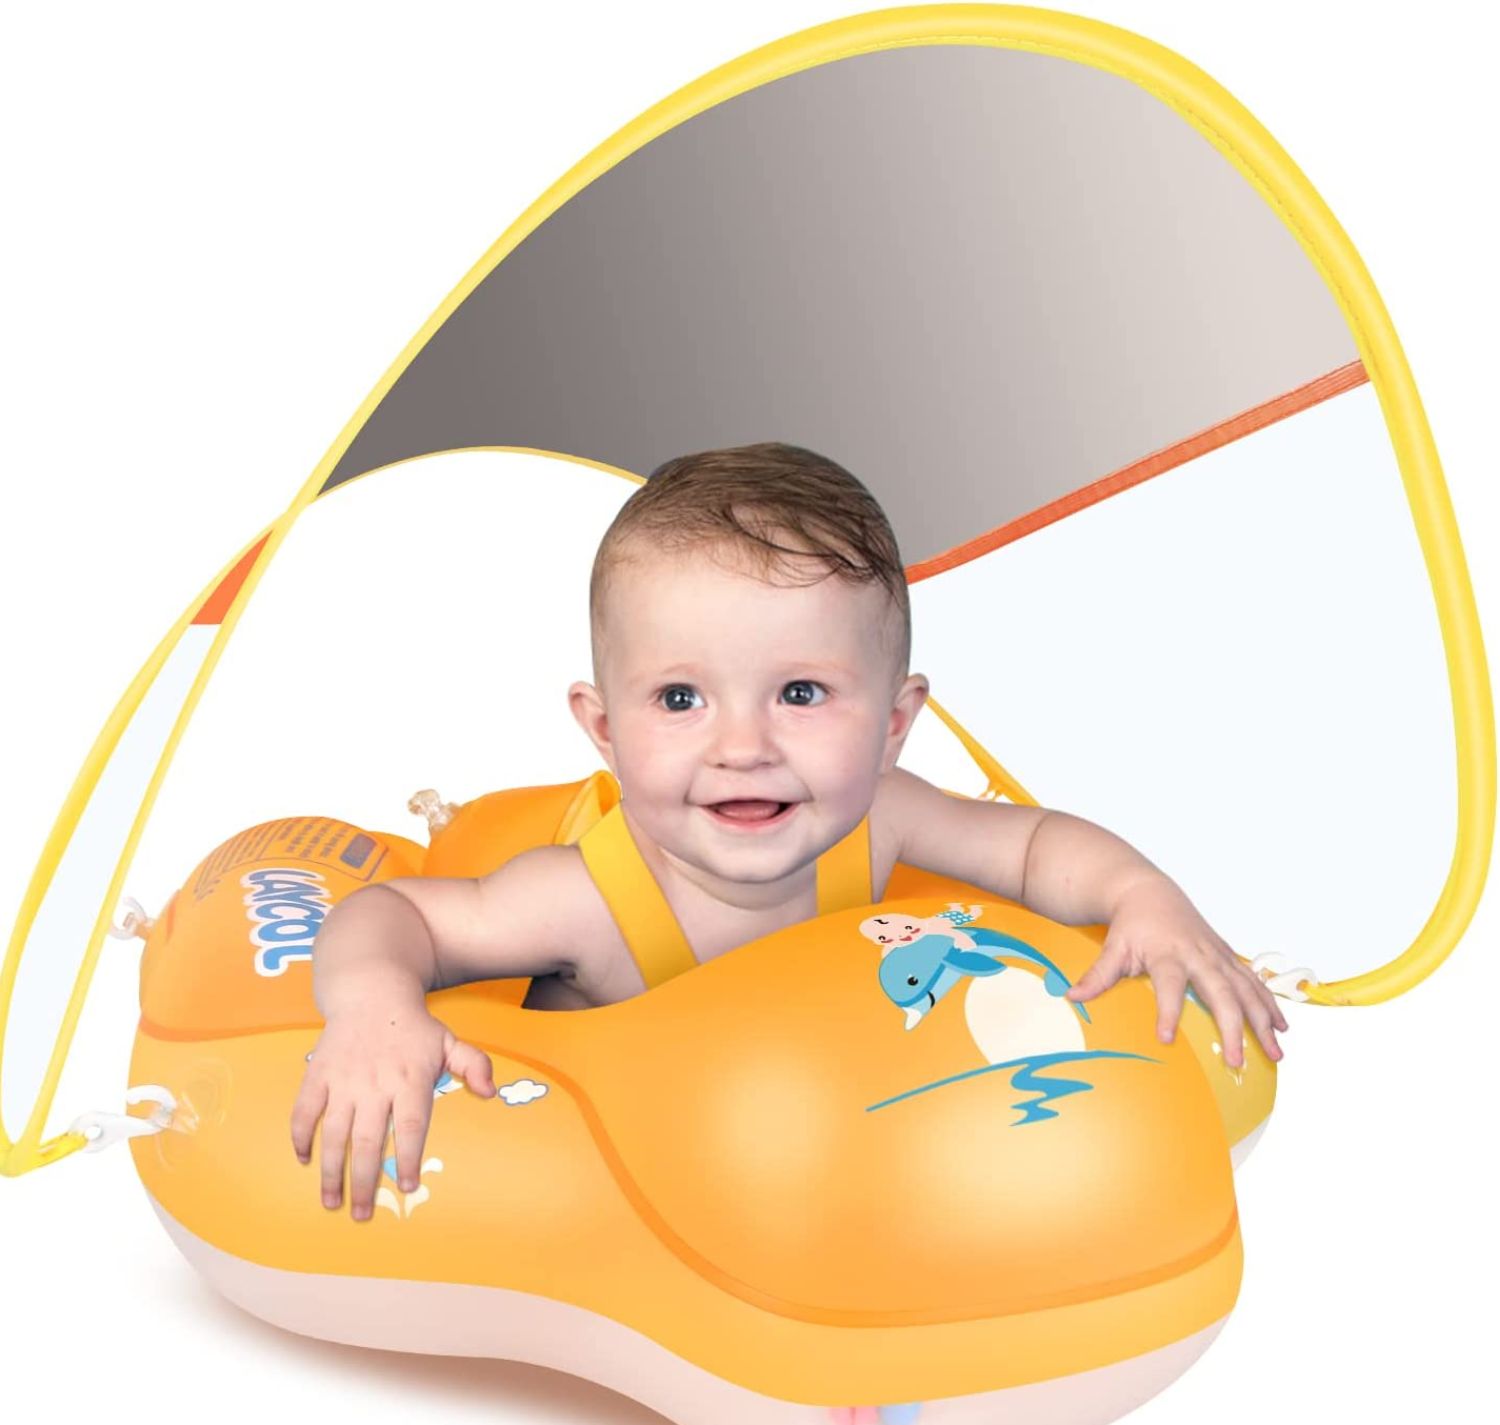 Inflatable baby pools